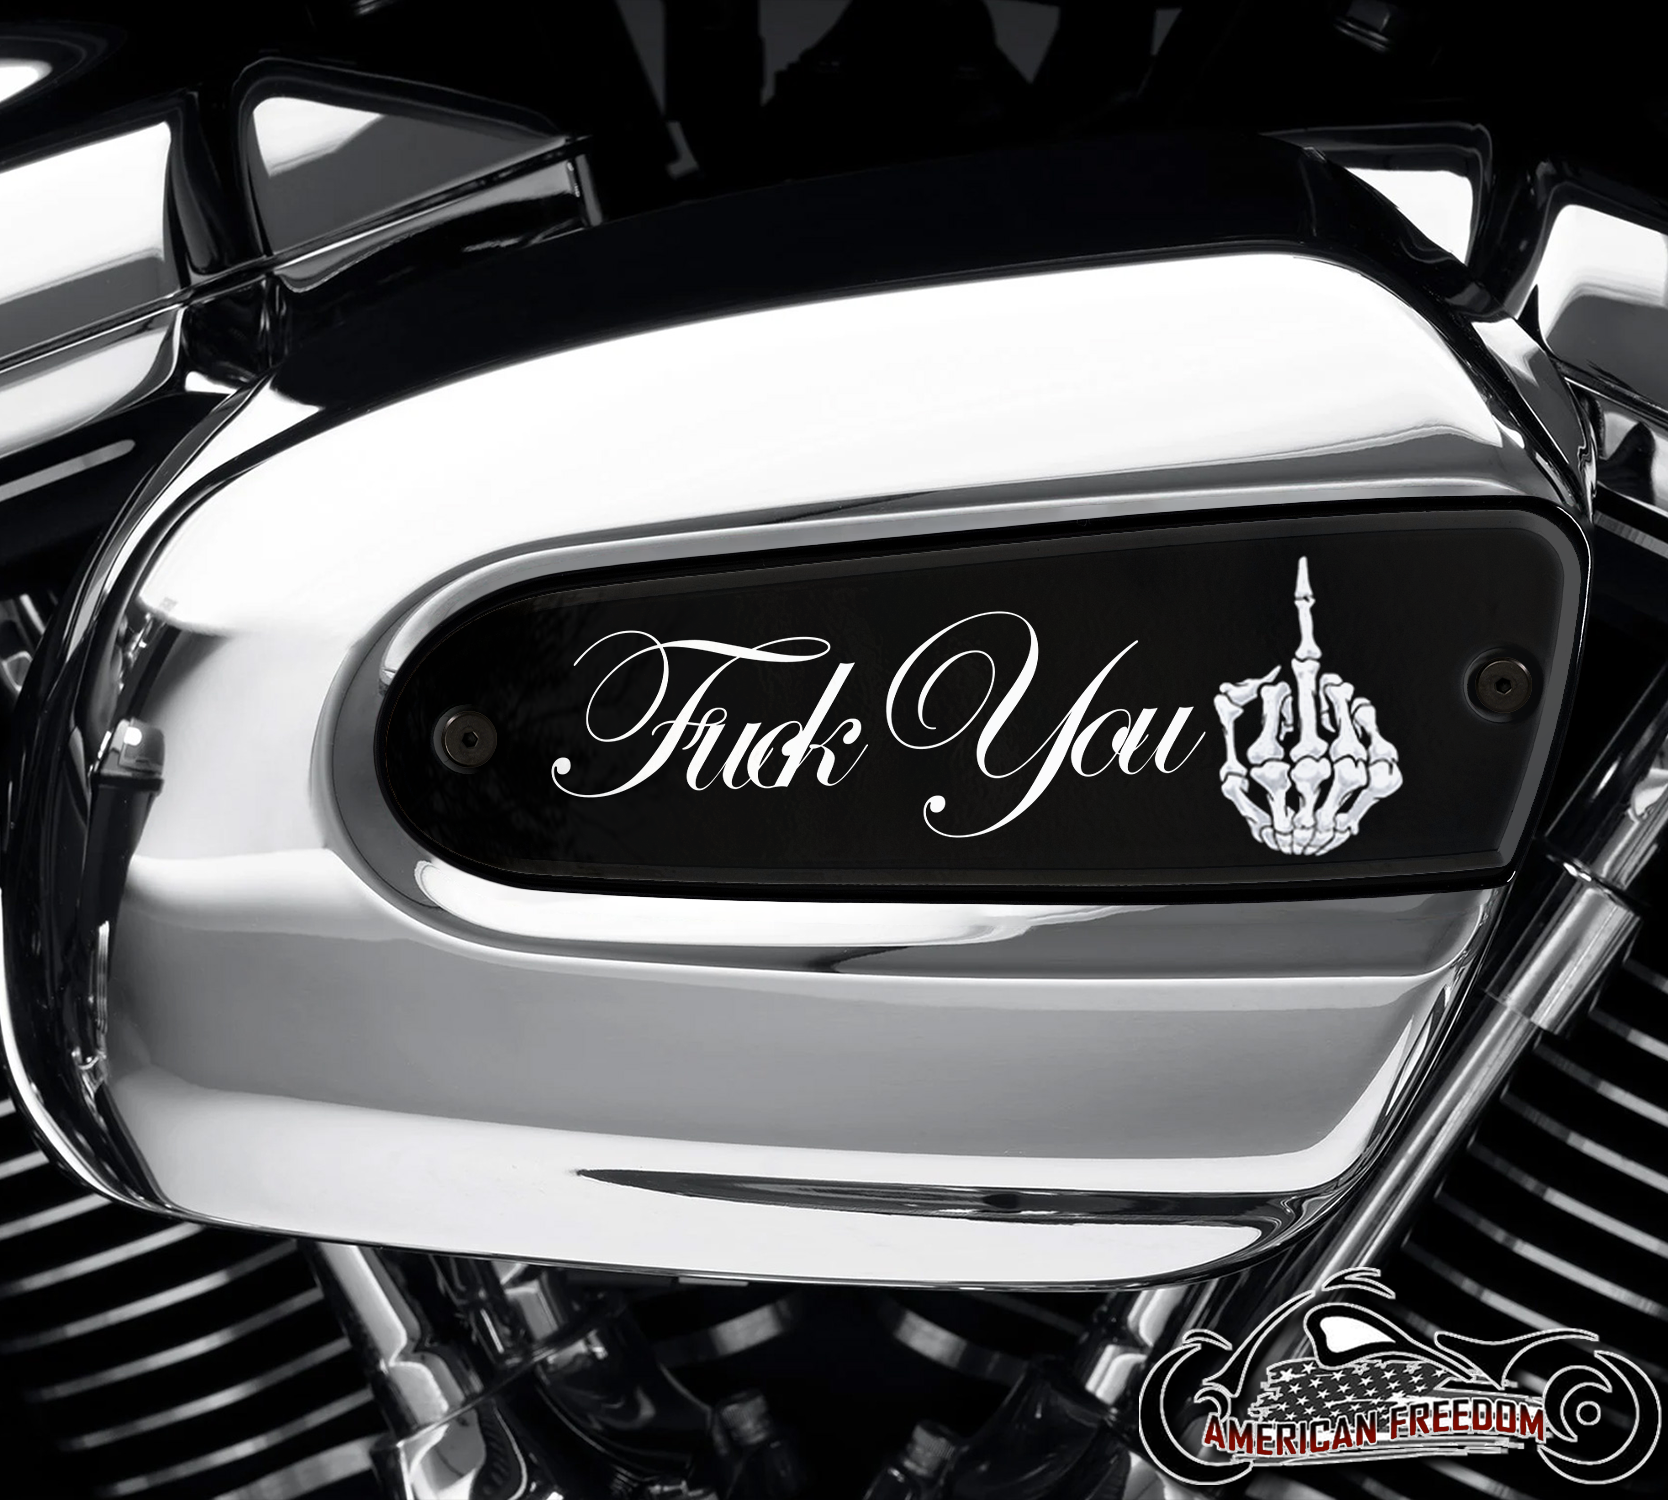 Harley Davidson Wedge Air Cleaner Insert - F You